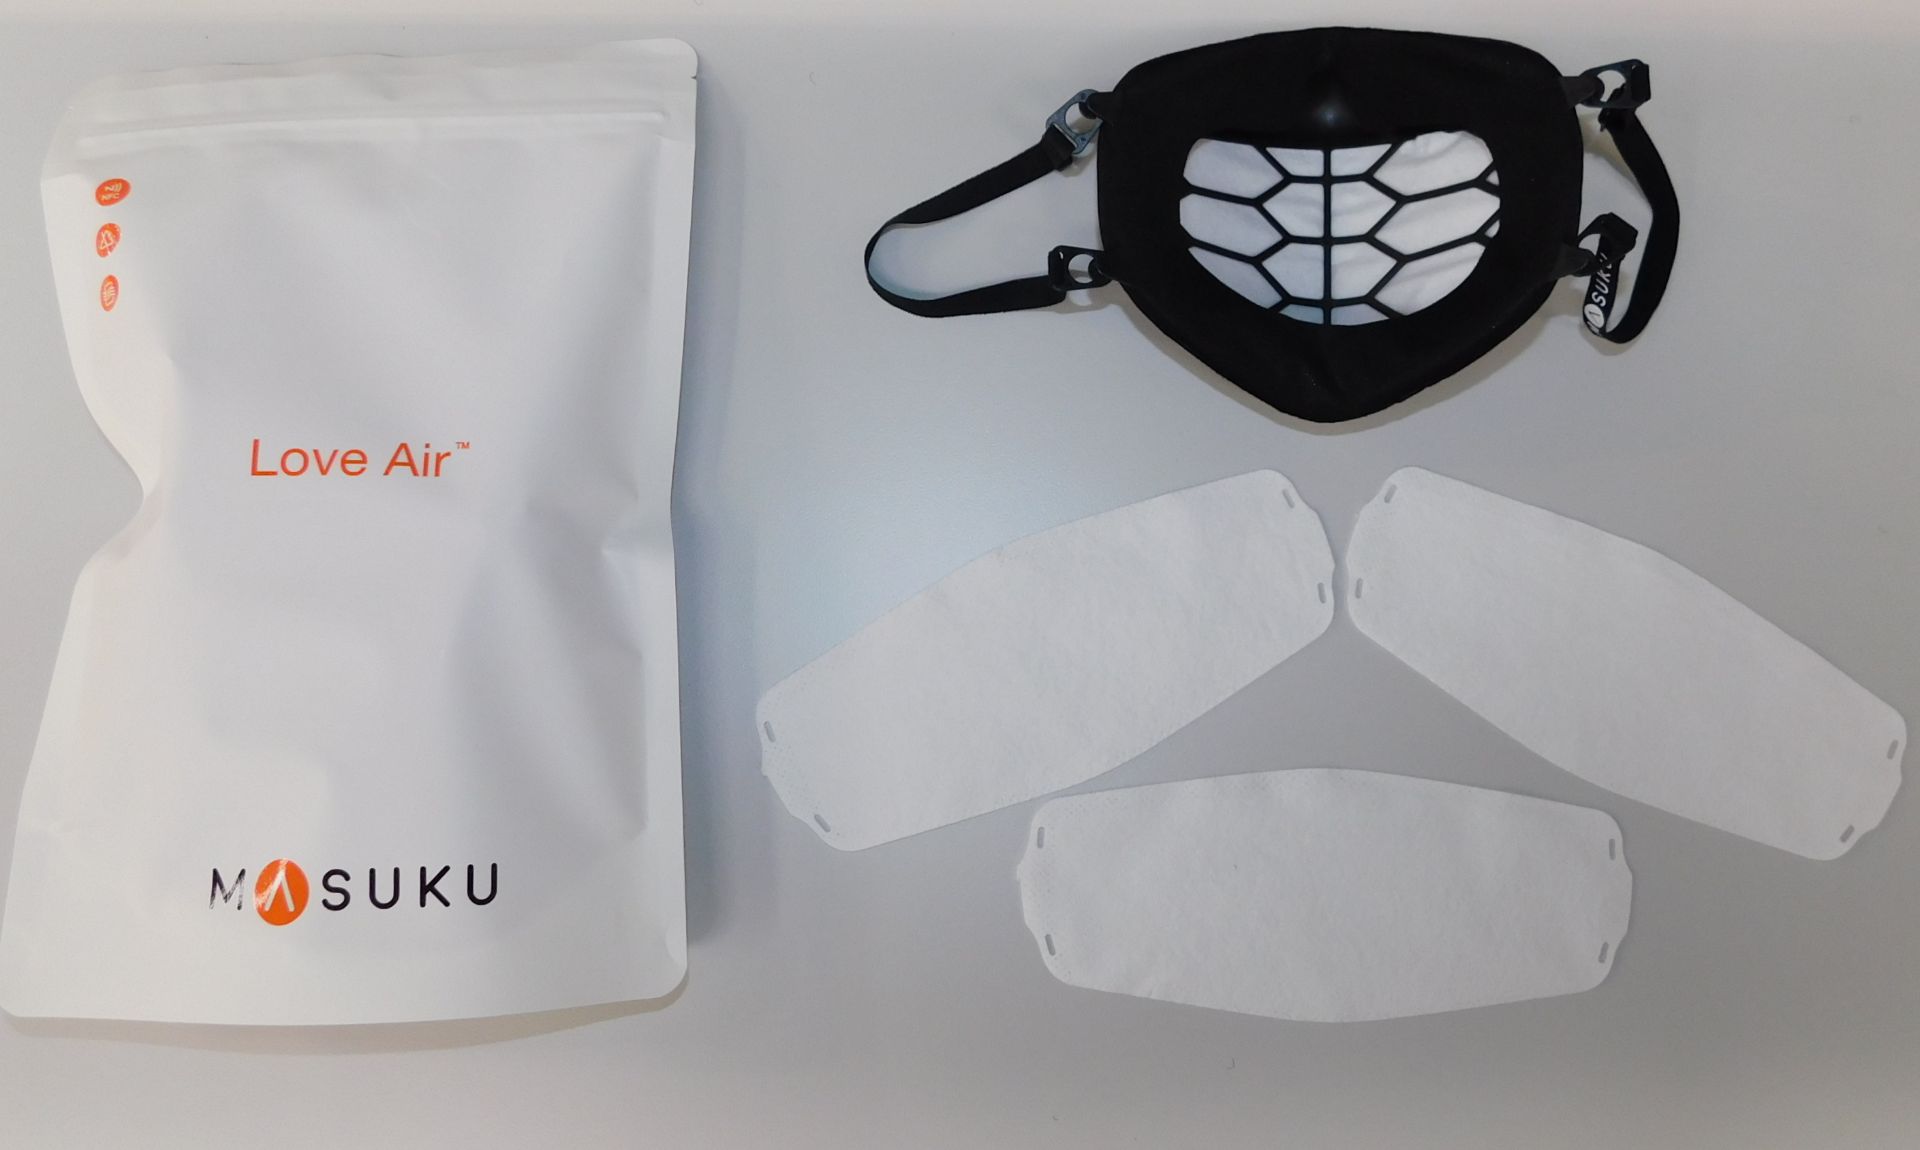 100 Masuku One Reusable Face Masks, Smooth Black on Black, Small (2 Boxes) - Image 2 of 3